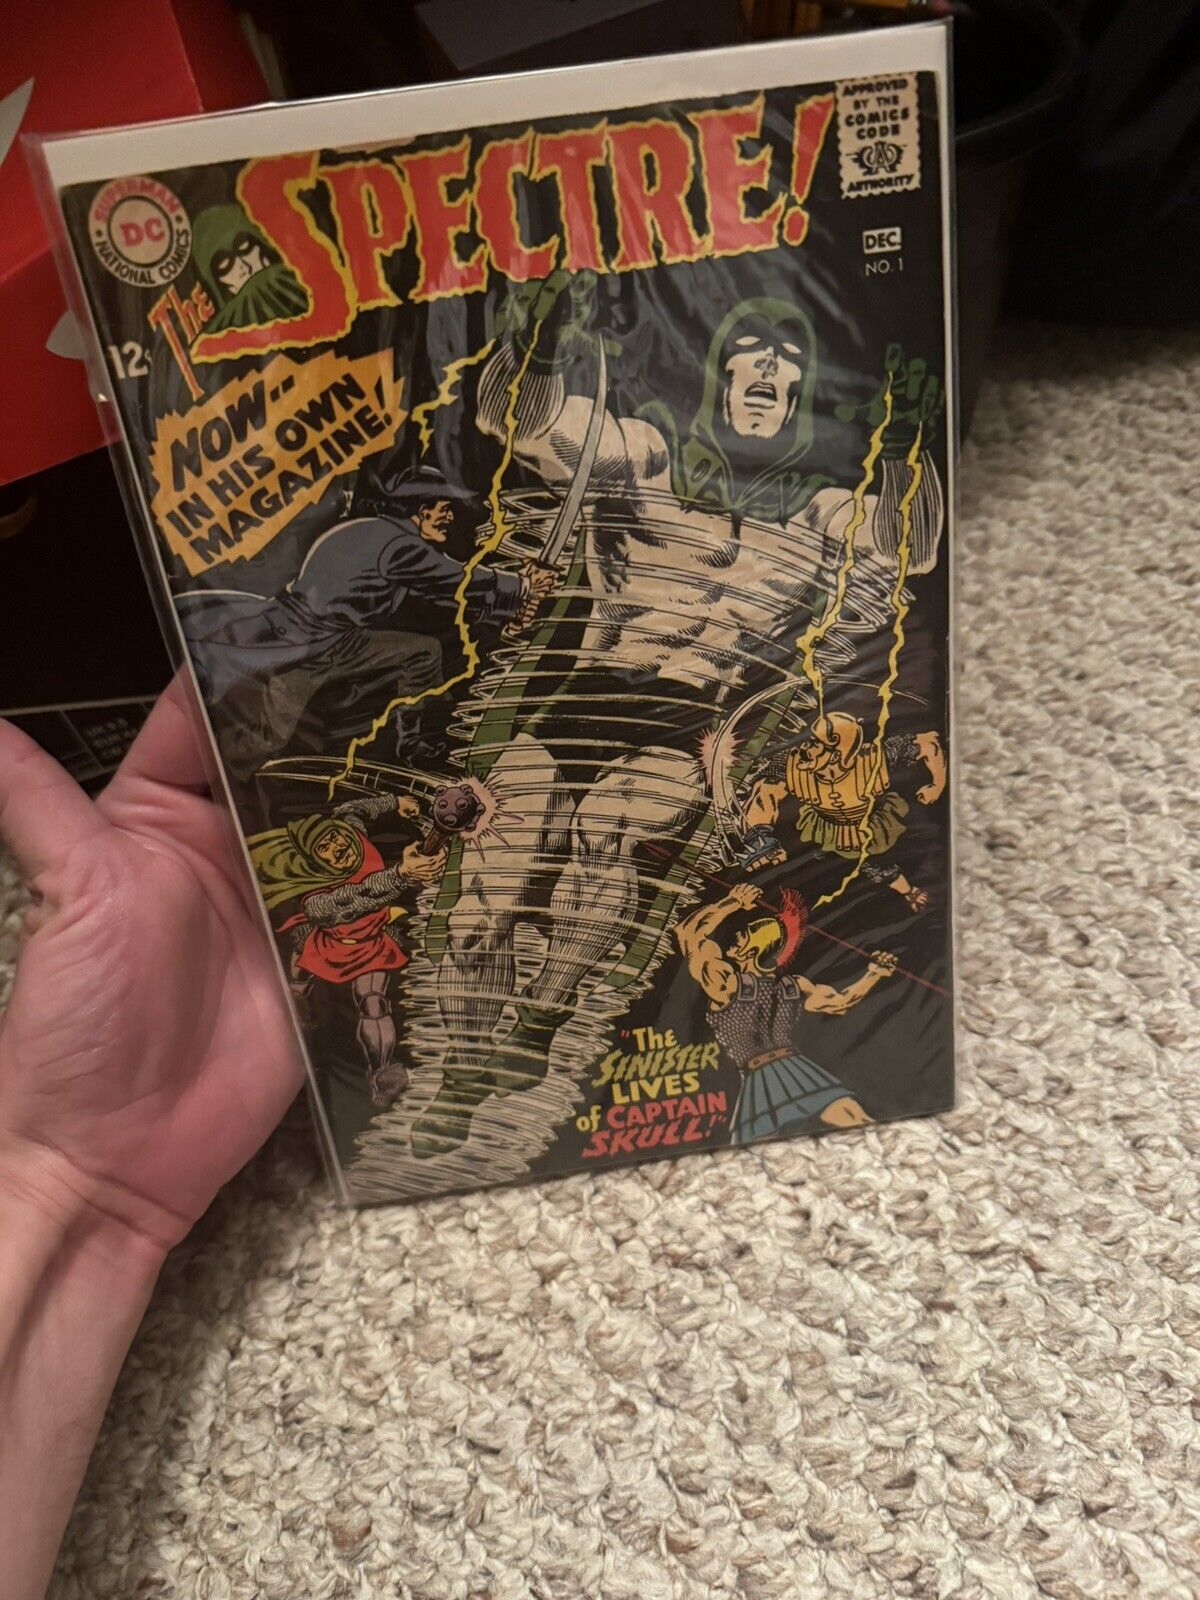 The Spectre #1 (DC Comics November-December 1967)